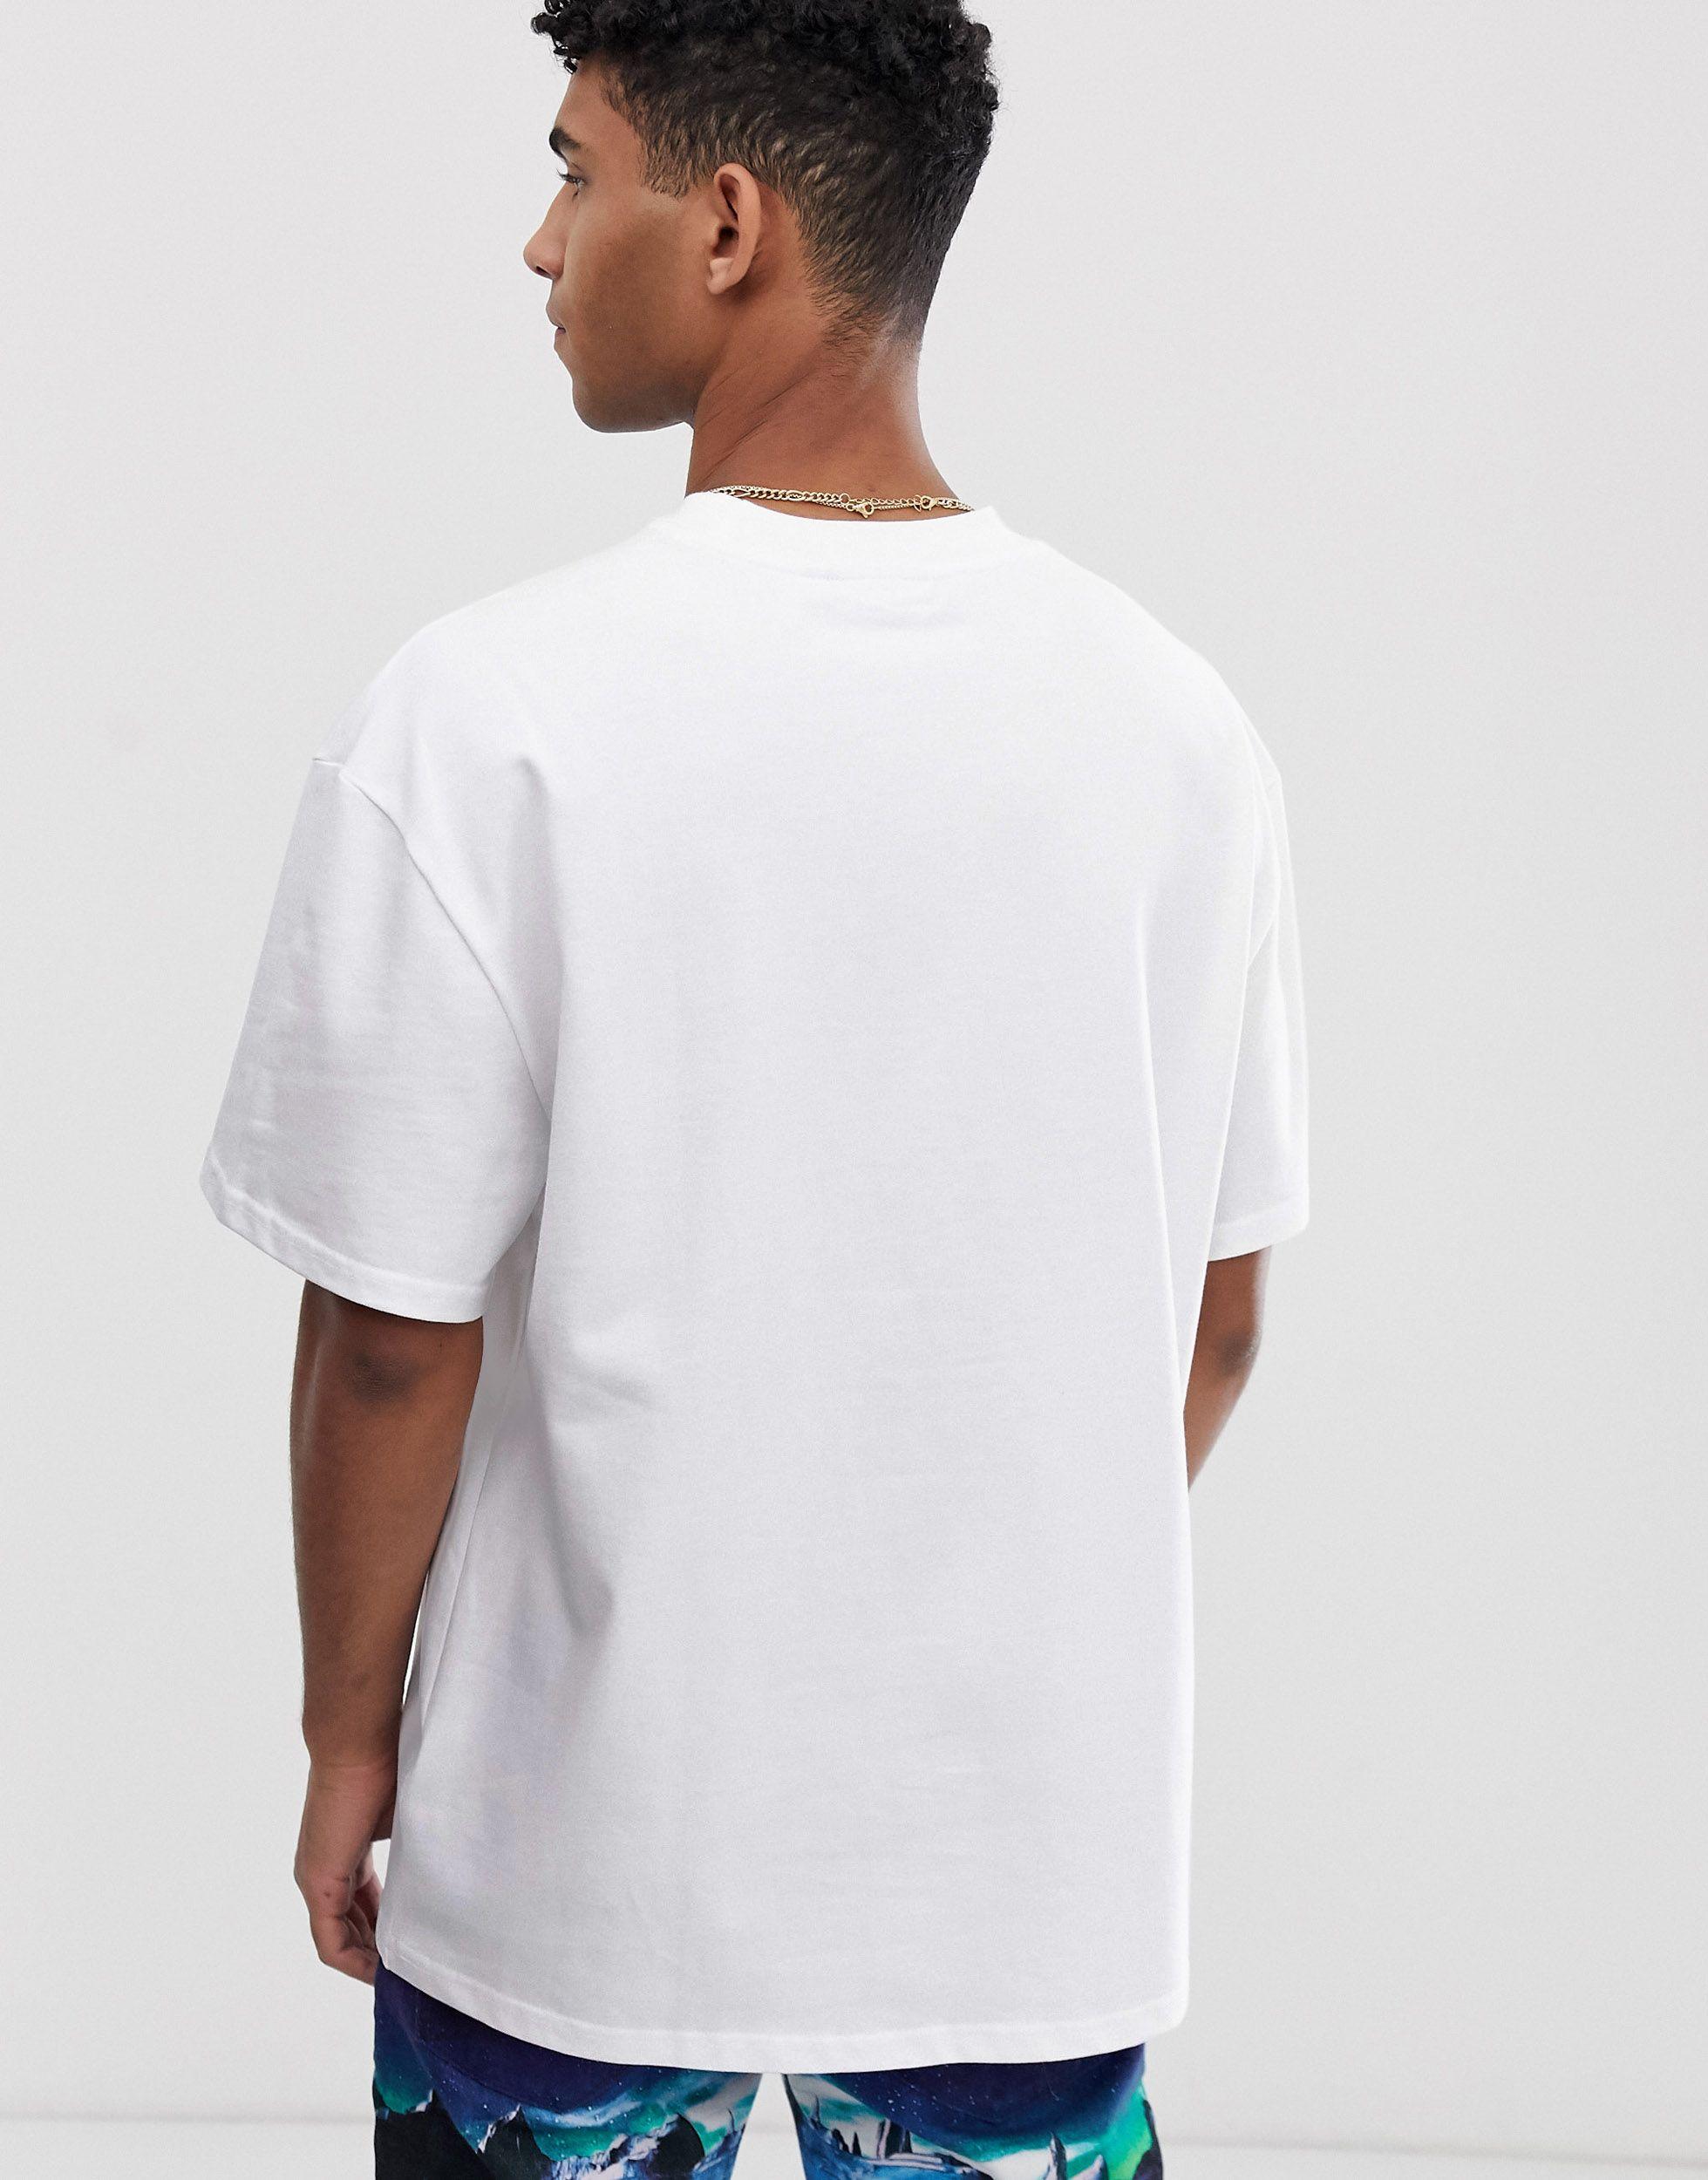 Weekday Denim Great T-shirt in White for Men - Lyst